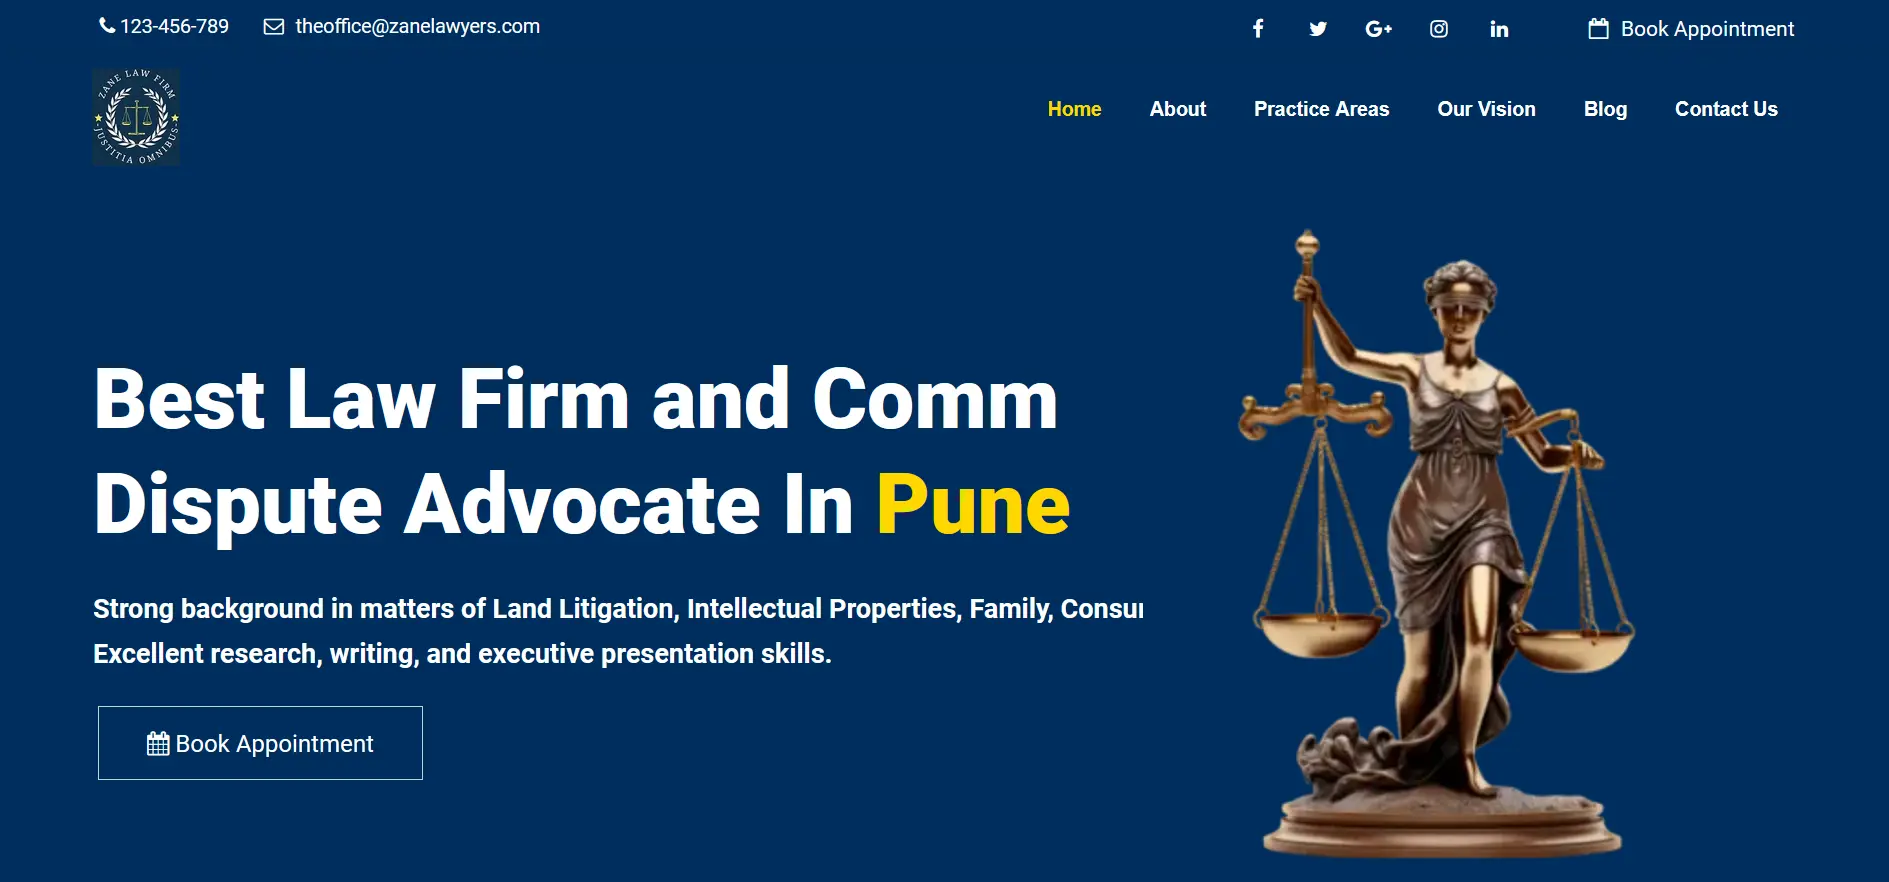 Law Firm Website Development